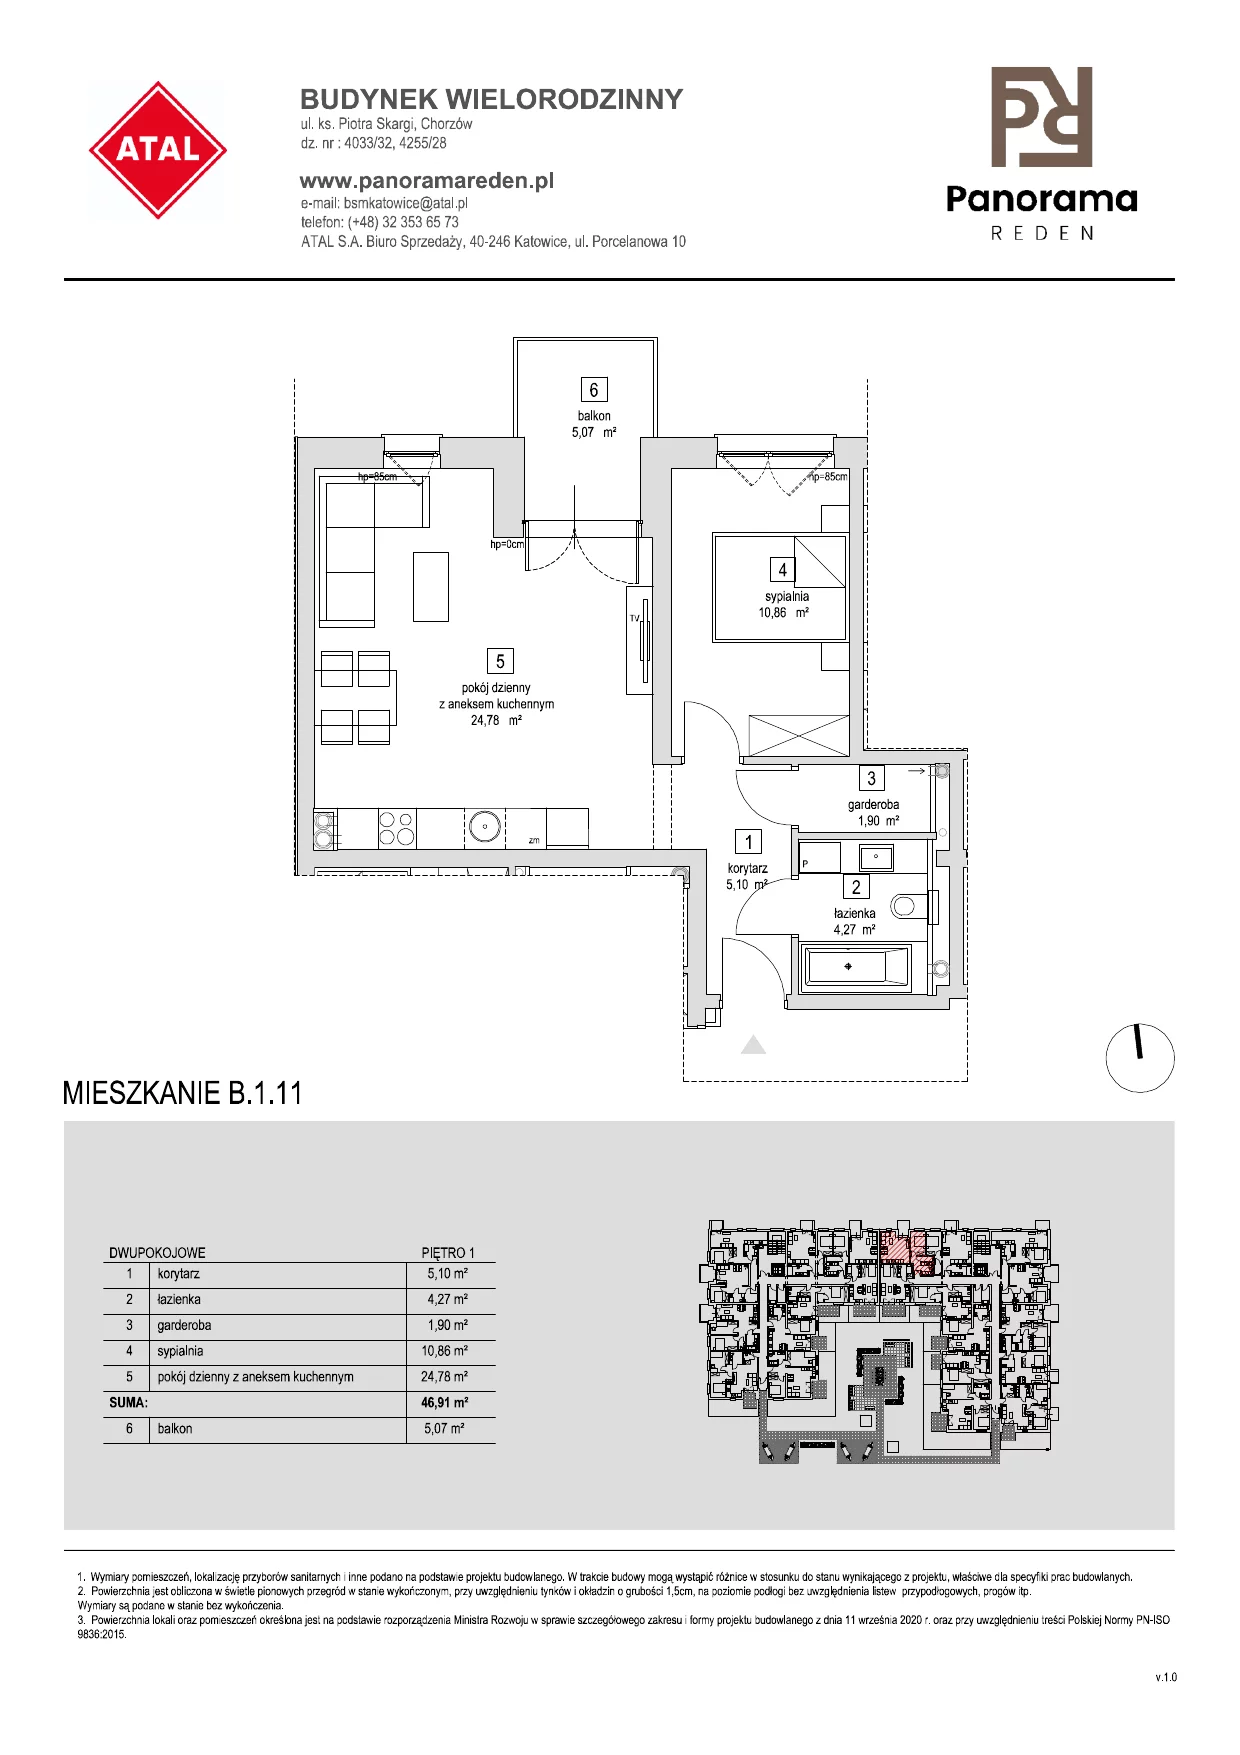 Mieszkanie 47,34 m², piętro 1, oferta nr B-1-M11, Panorama Reden, Chorzów, Centrum, Centrum, ul. Piotra Skargi